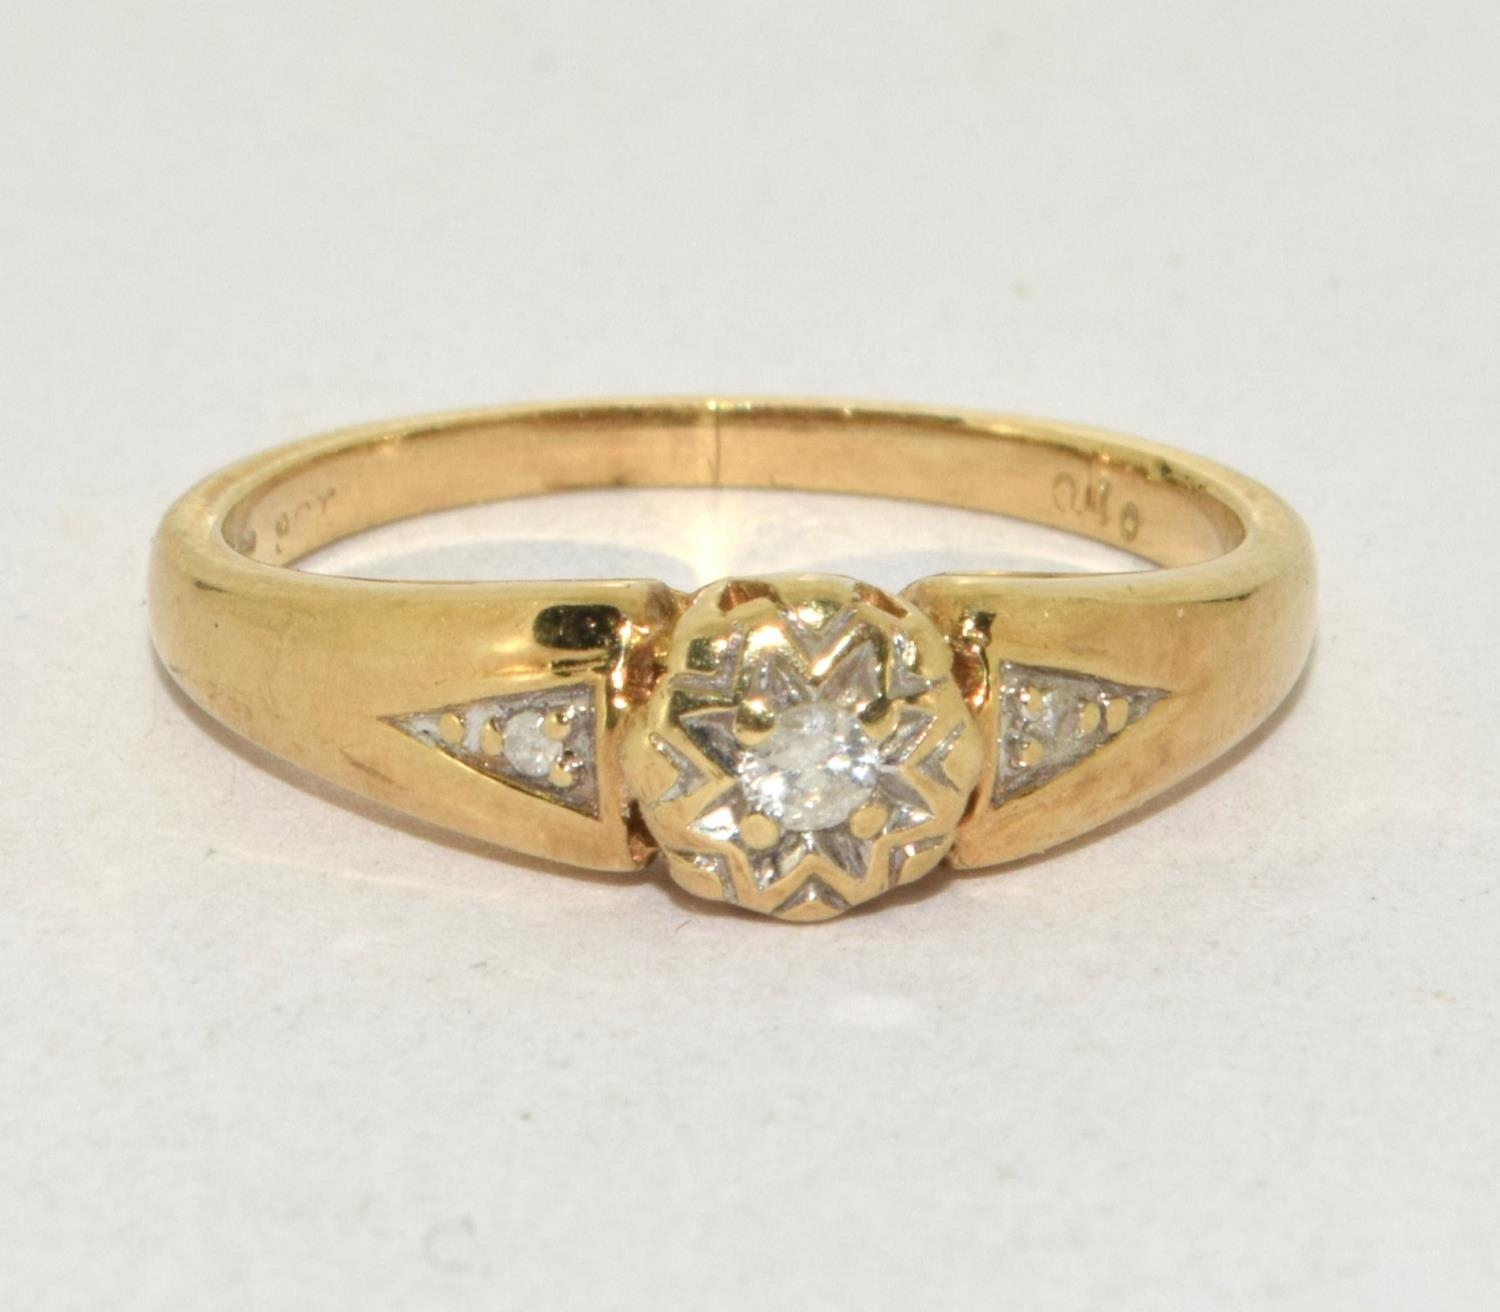 9ct gold ladies vintage Diamond ring size M